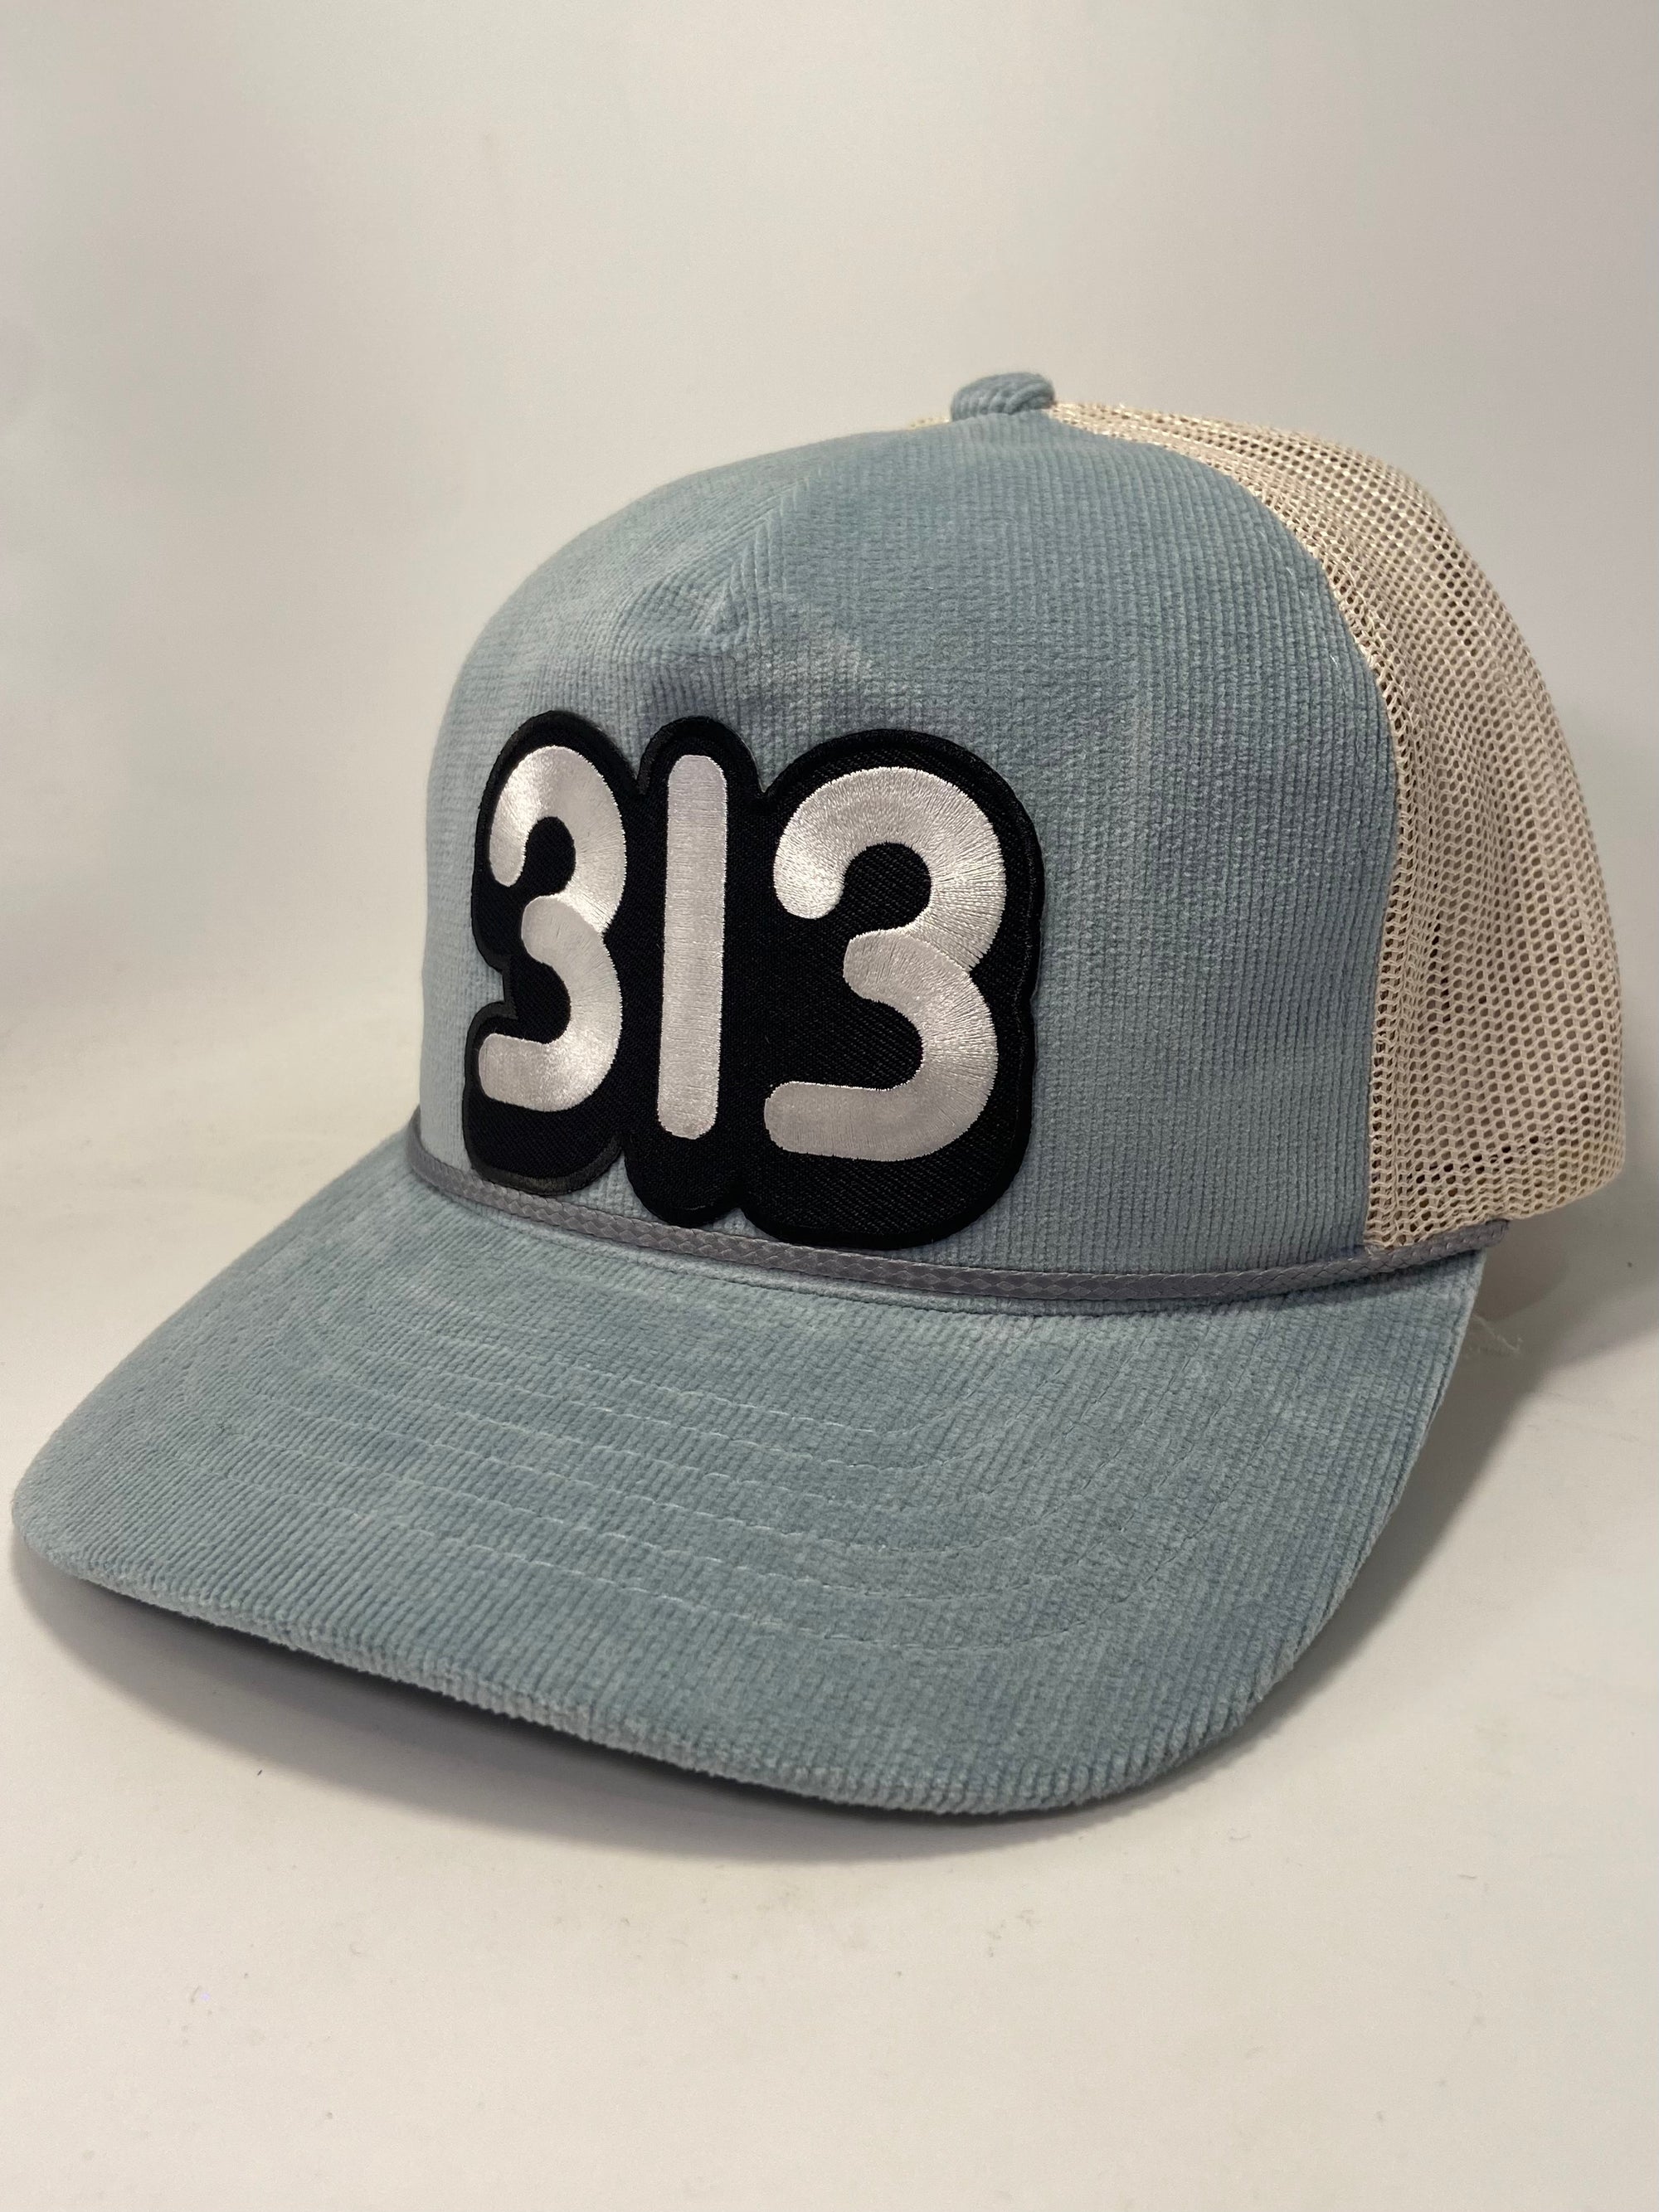 313 Corduroy Trucker Adjustable Hat / Unisex/ Cream + Light Blue Hat   